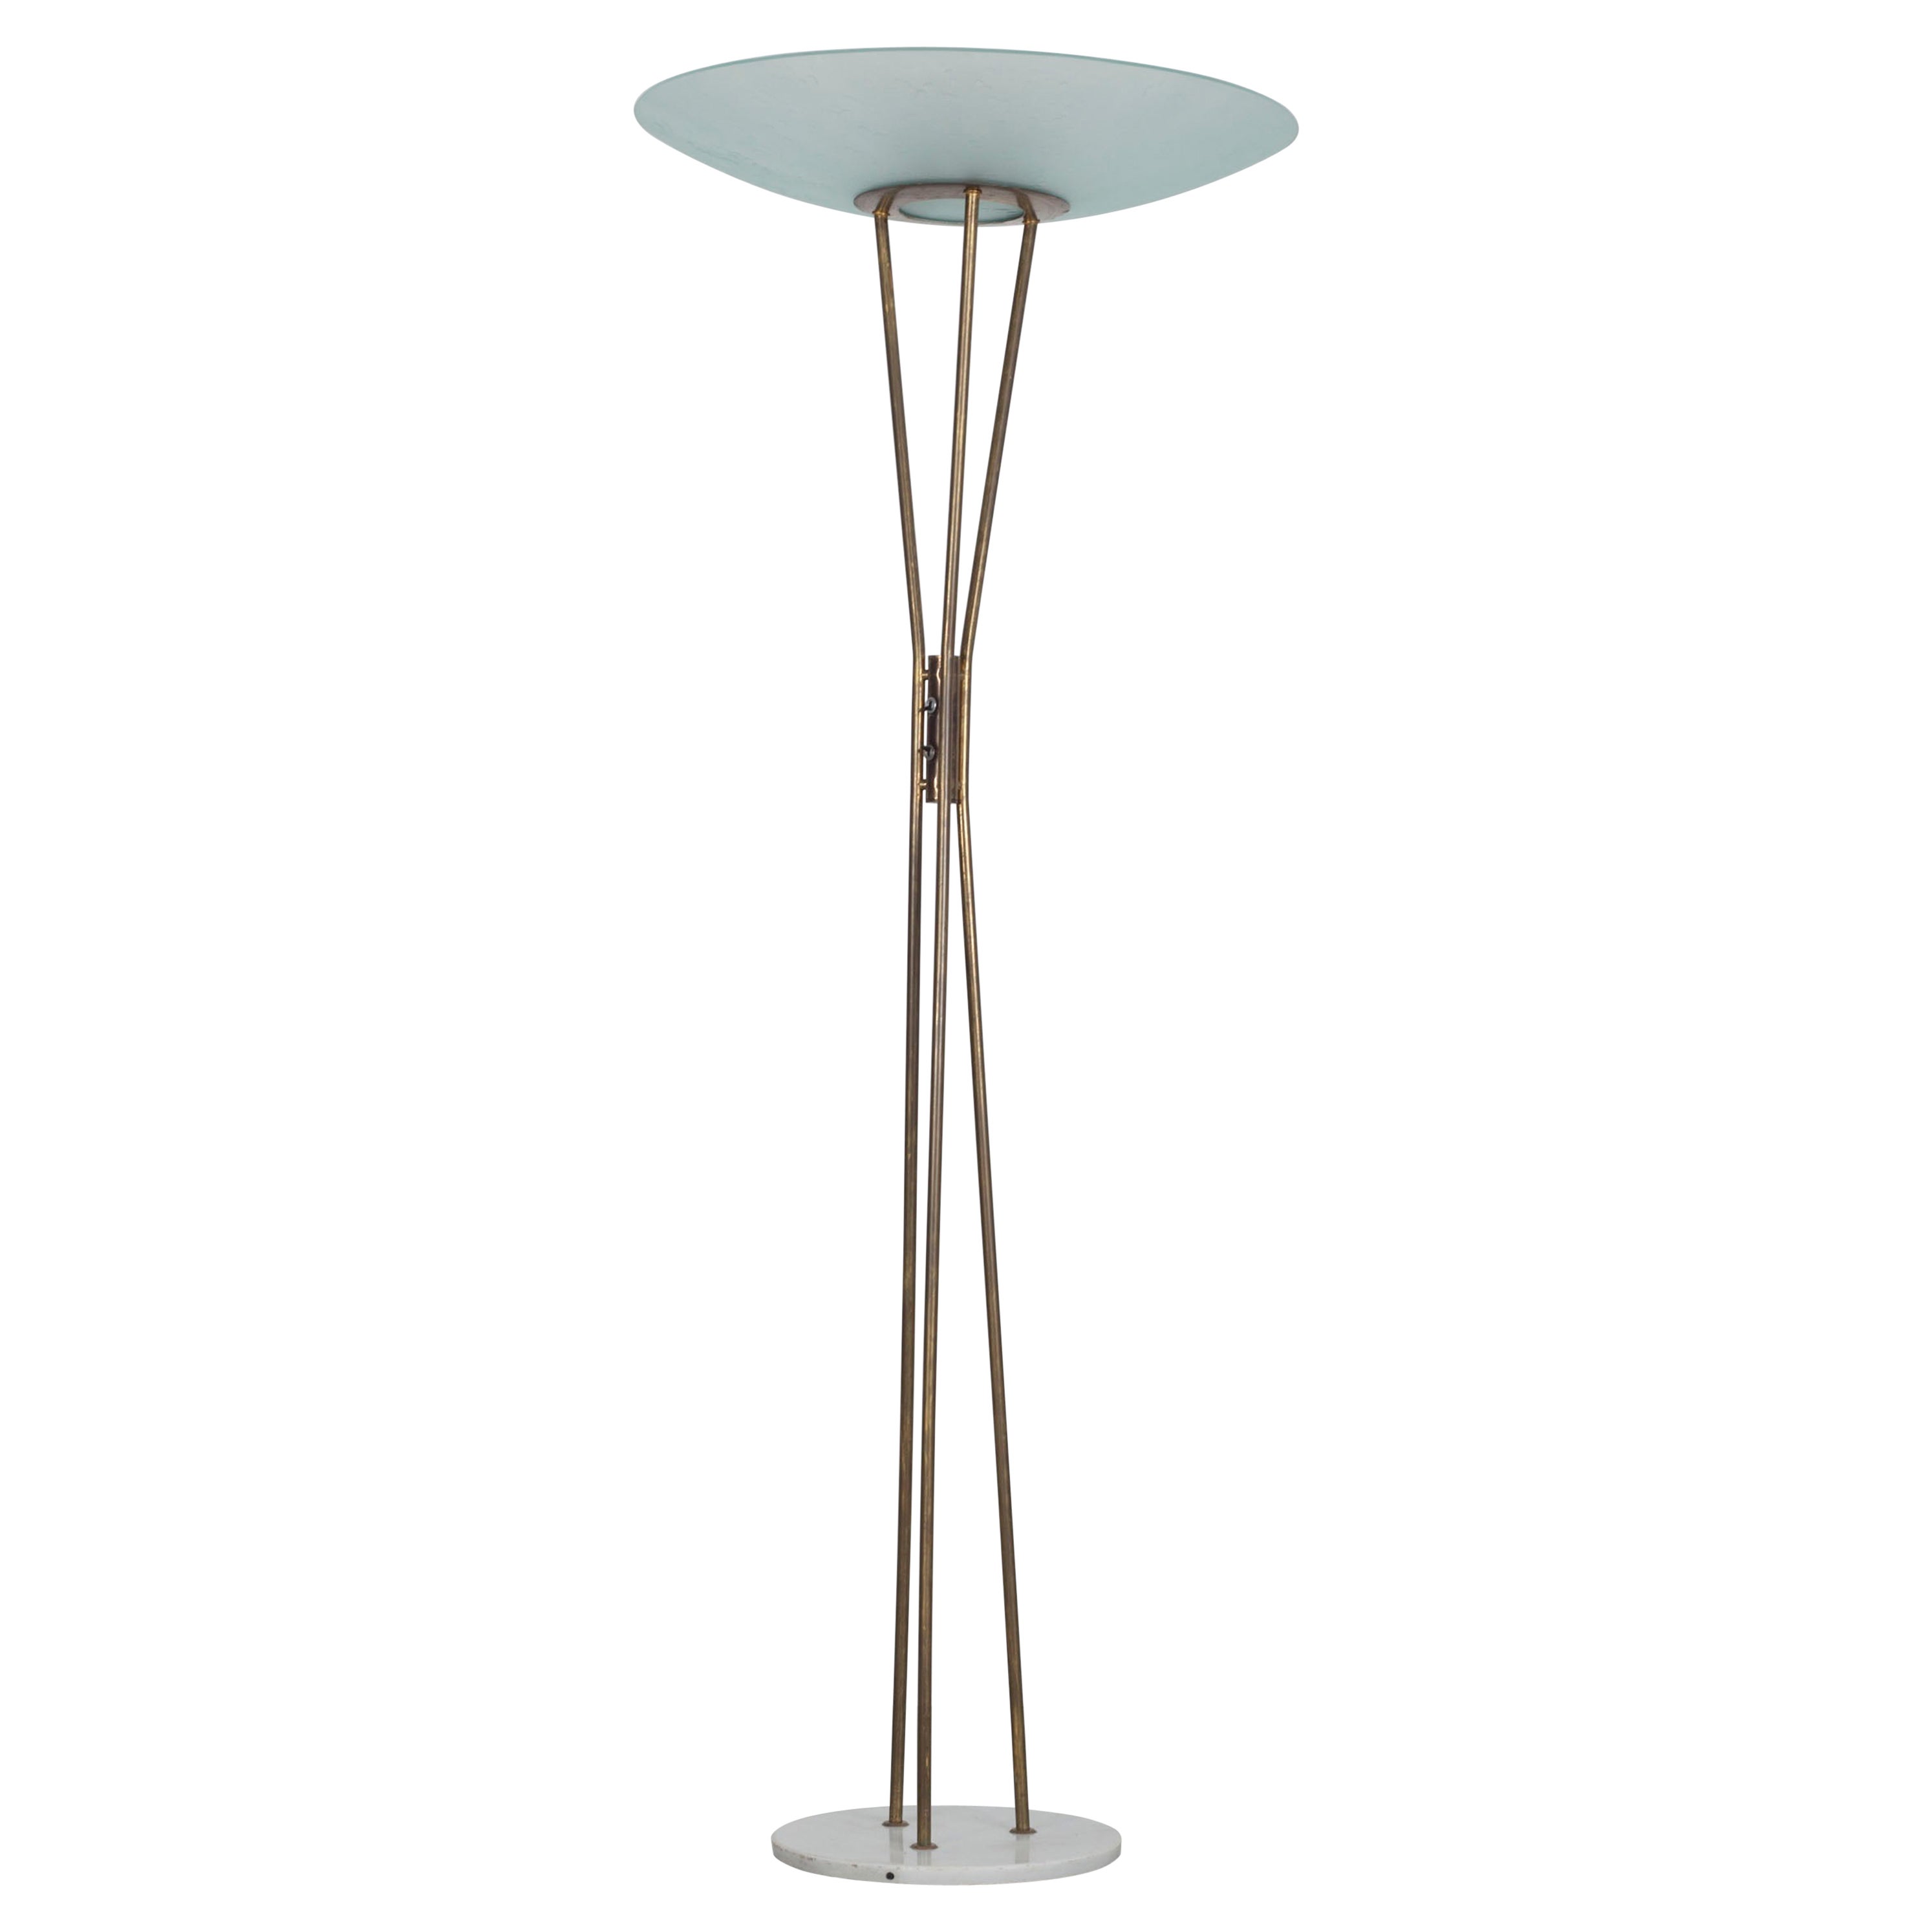 Gateano Scolari Stilnovo Italian Floor Lamp from the 50s For Sale